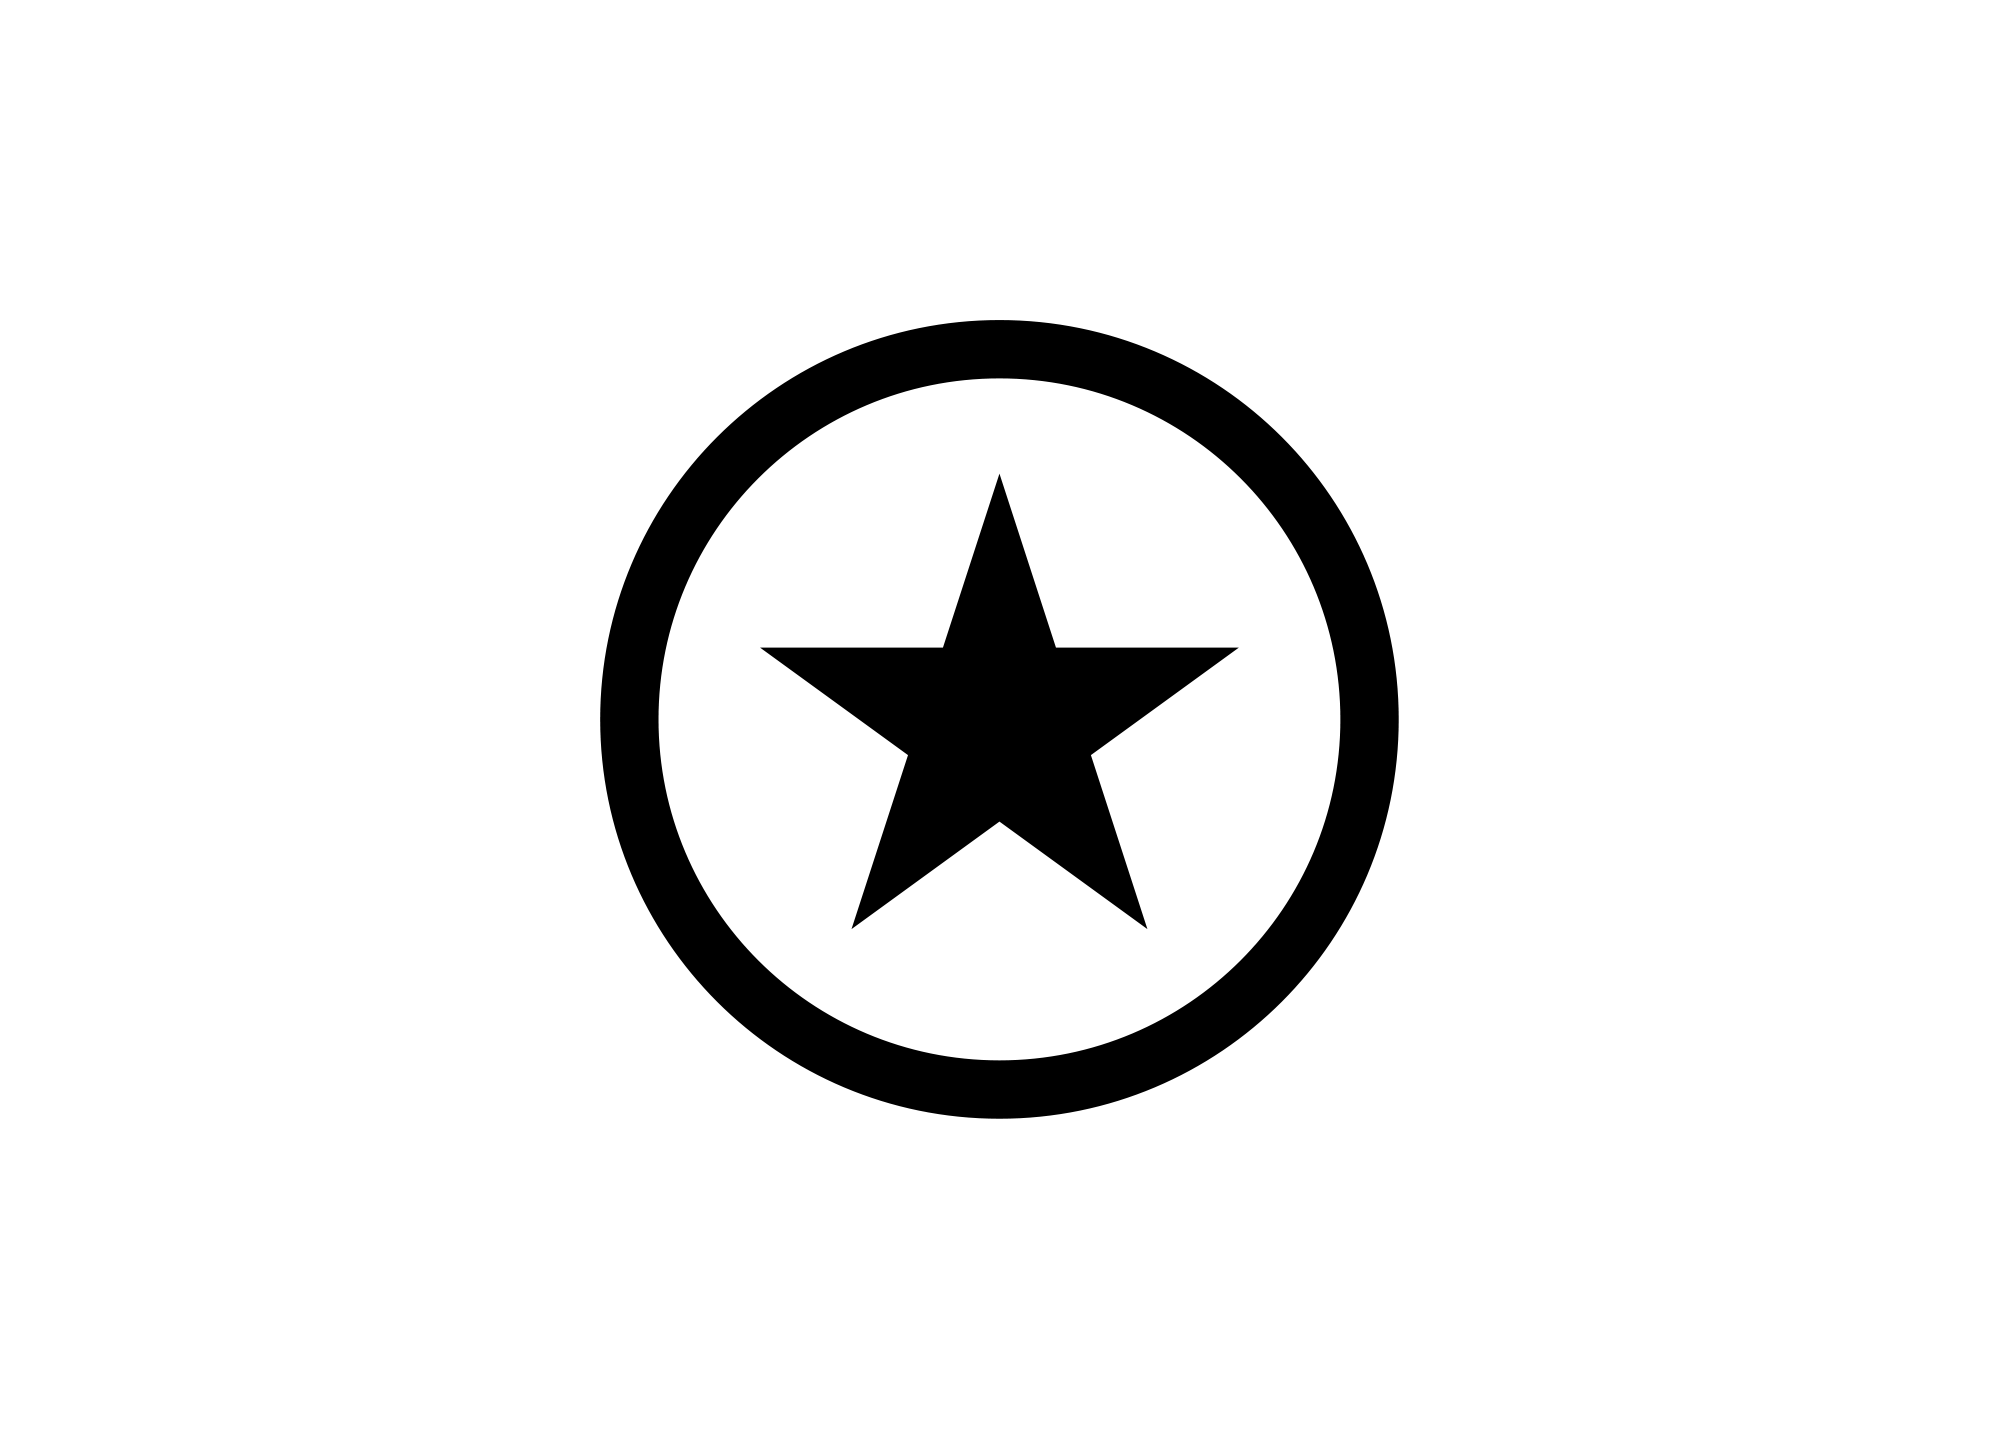 White and Black Star Logo - Black star Logos